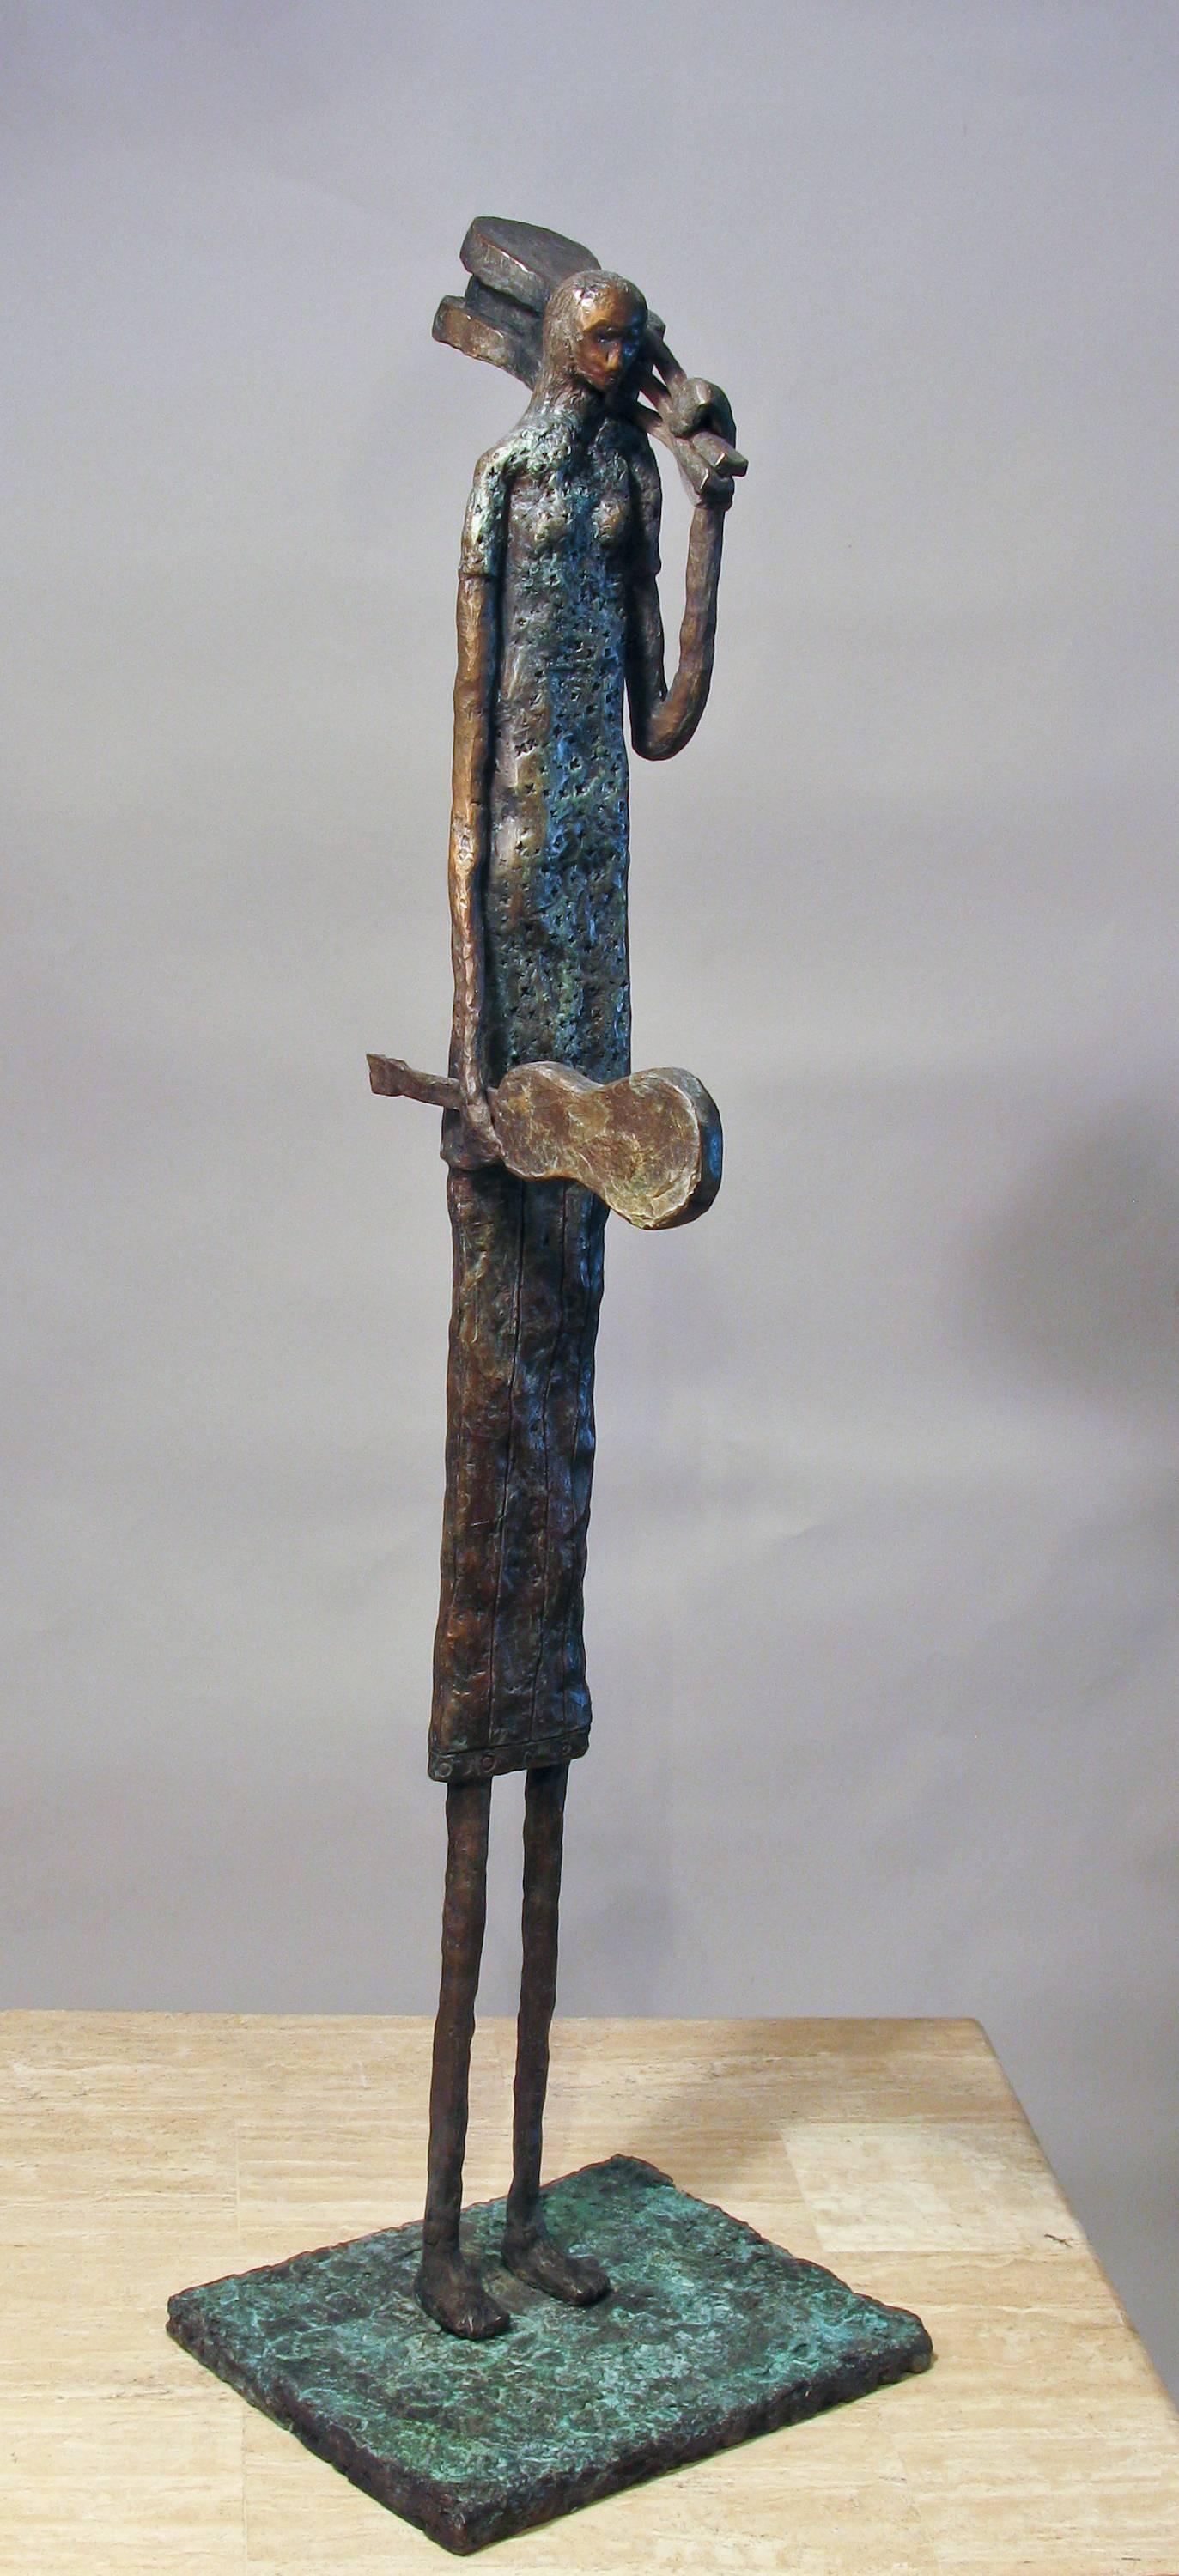 Guitarras, sculpture en bronze, verticale, vendeur de guitares, rustique, bronze texturé - Sculpture de Eduardo Oropeza